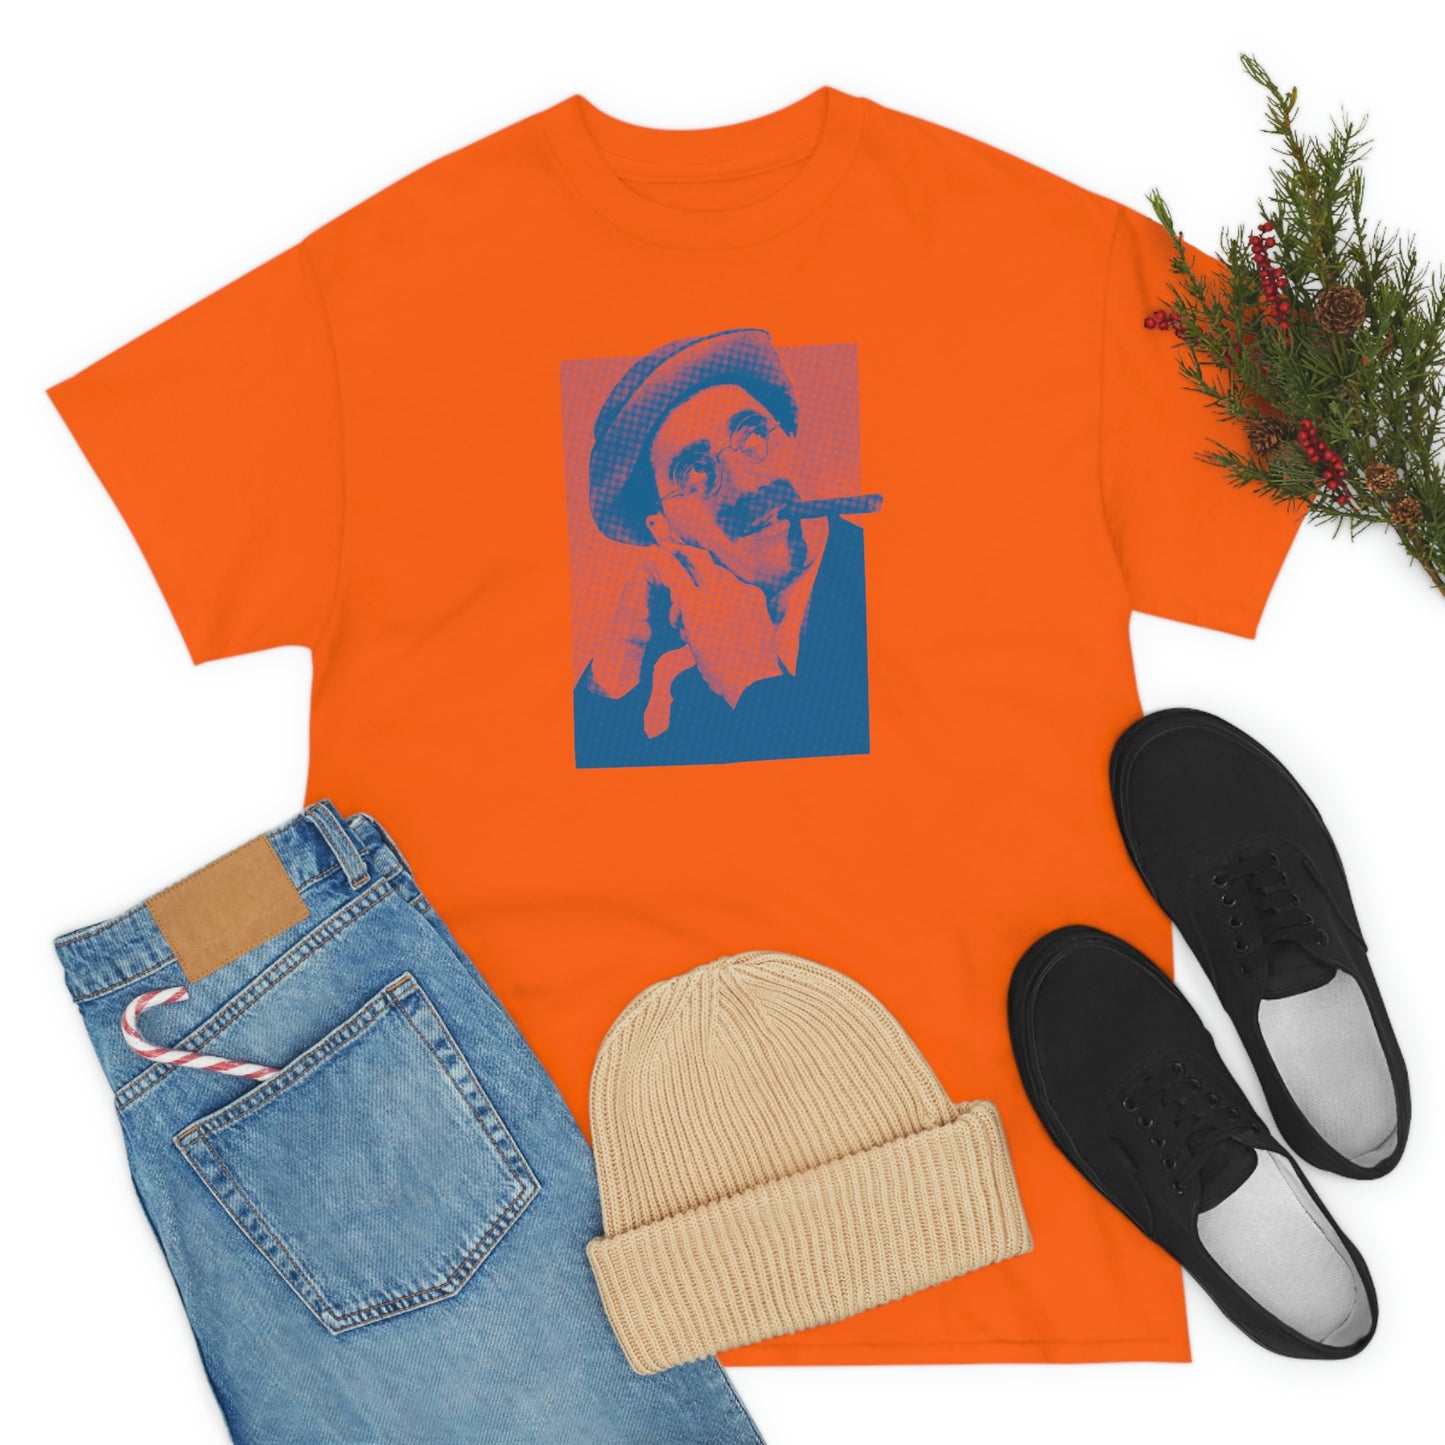 Groucho Marx T-Shirt